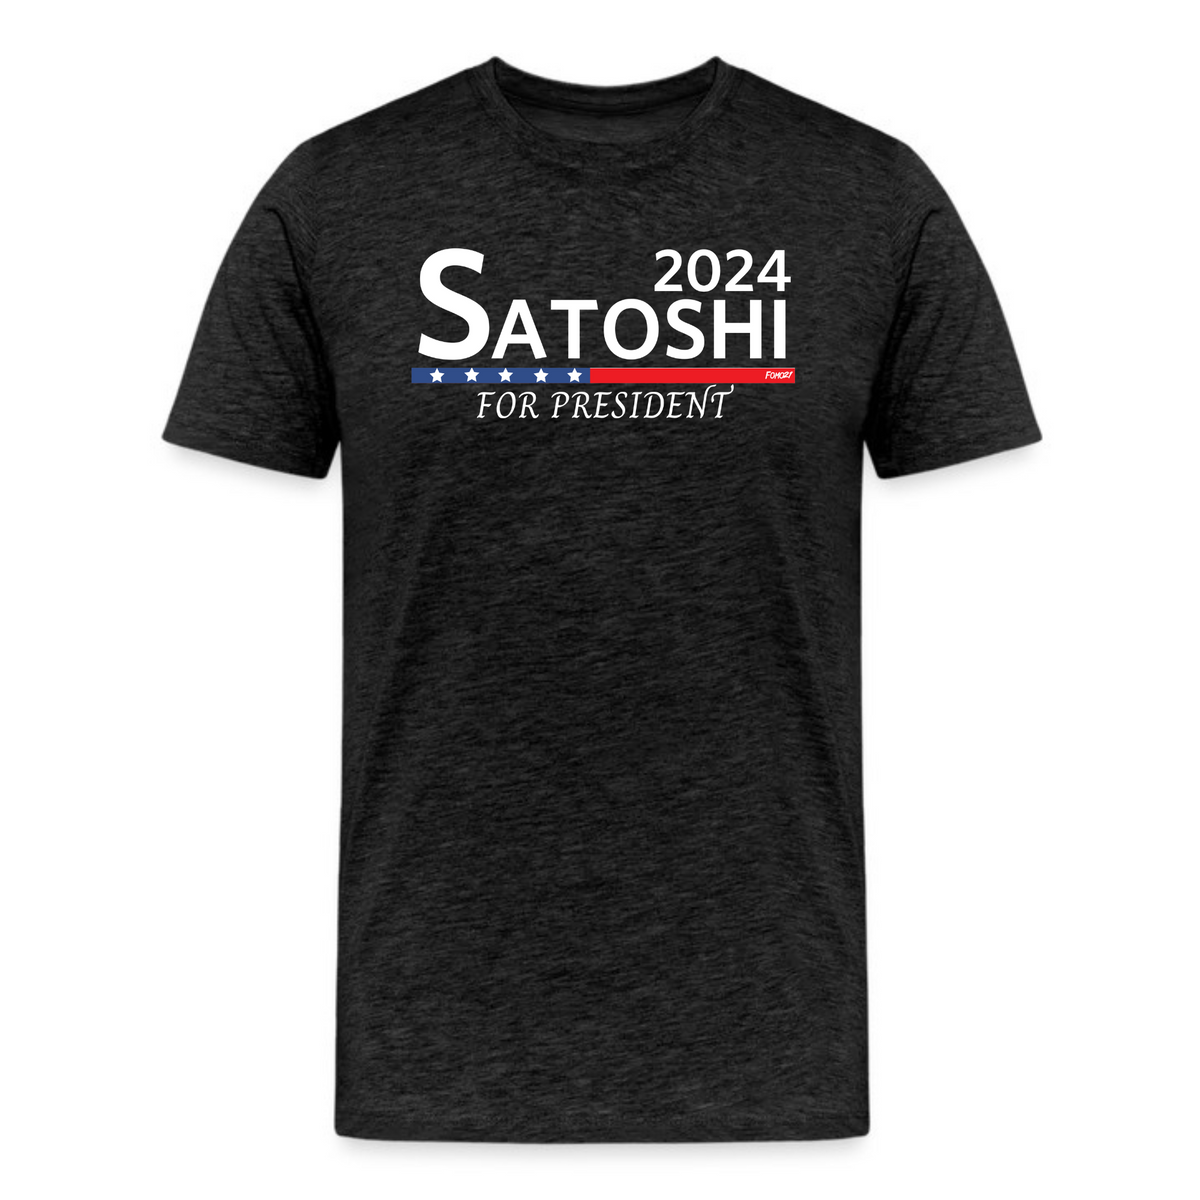 Satoshi For President 2024 (White Lettering) Bitcoin T-Shirt - fomo21